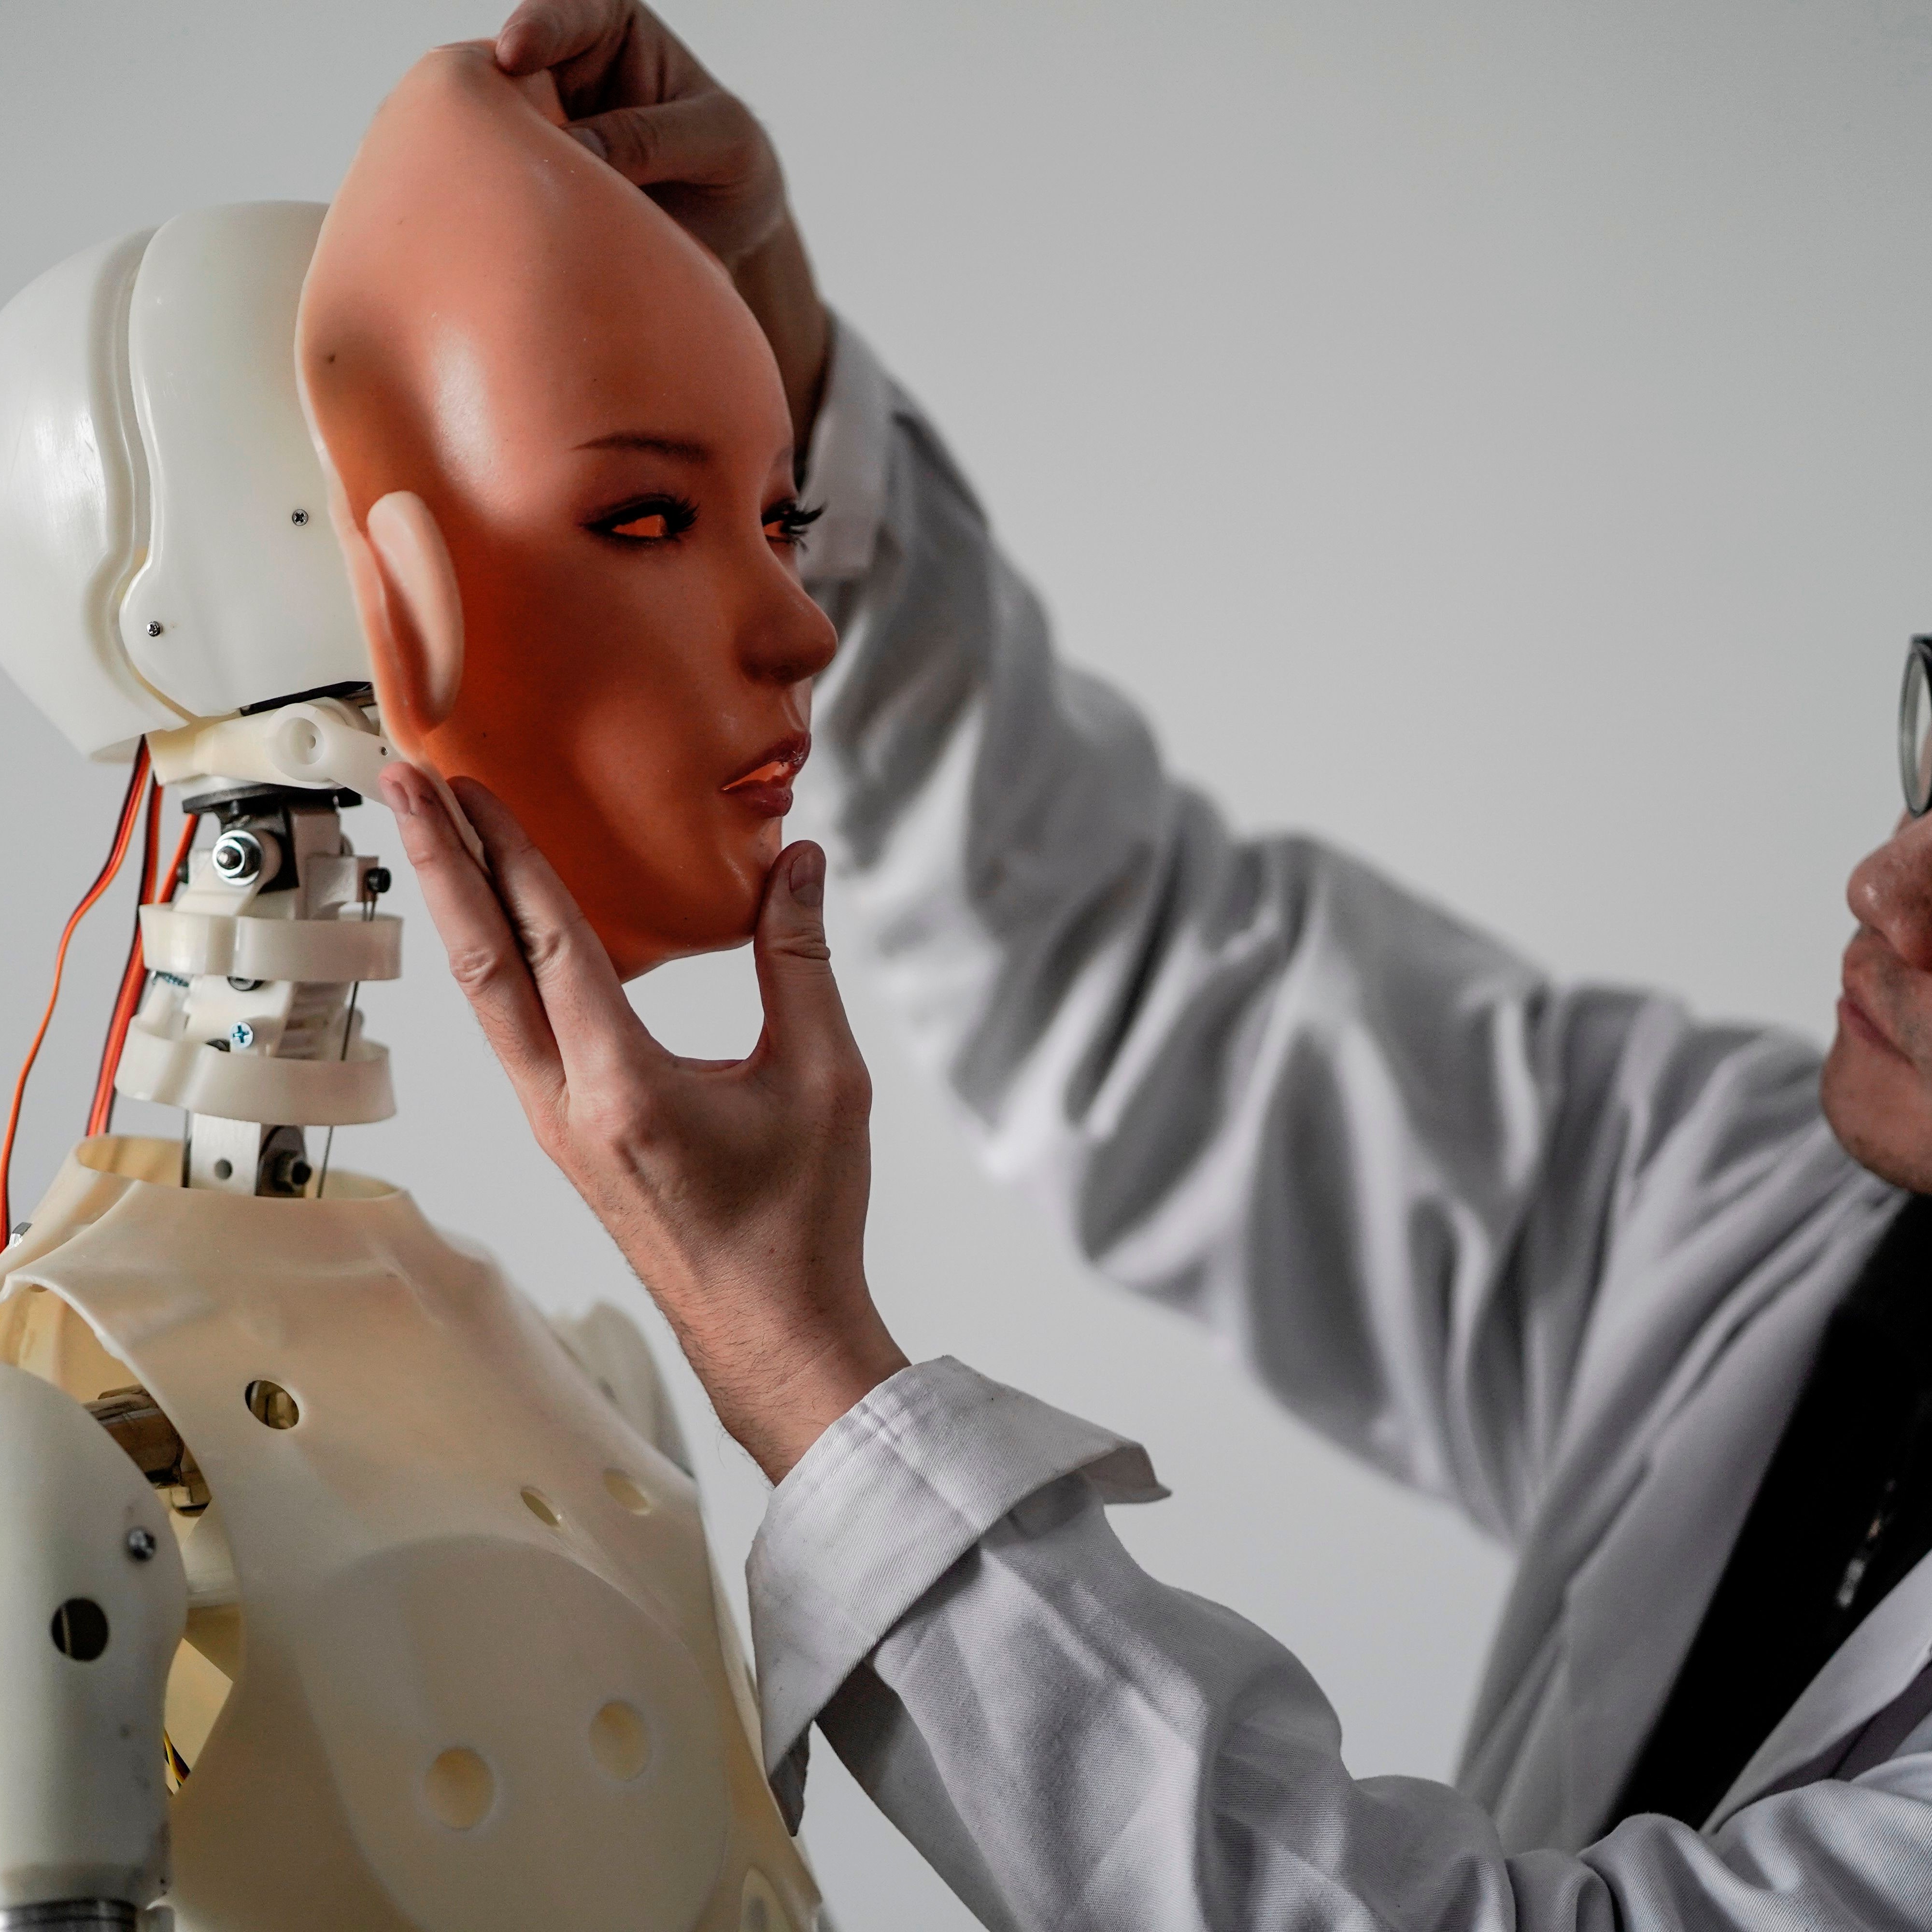 Sext With Robot Online parlor albuquerque